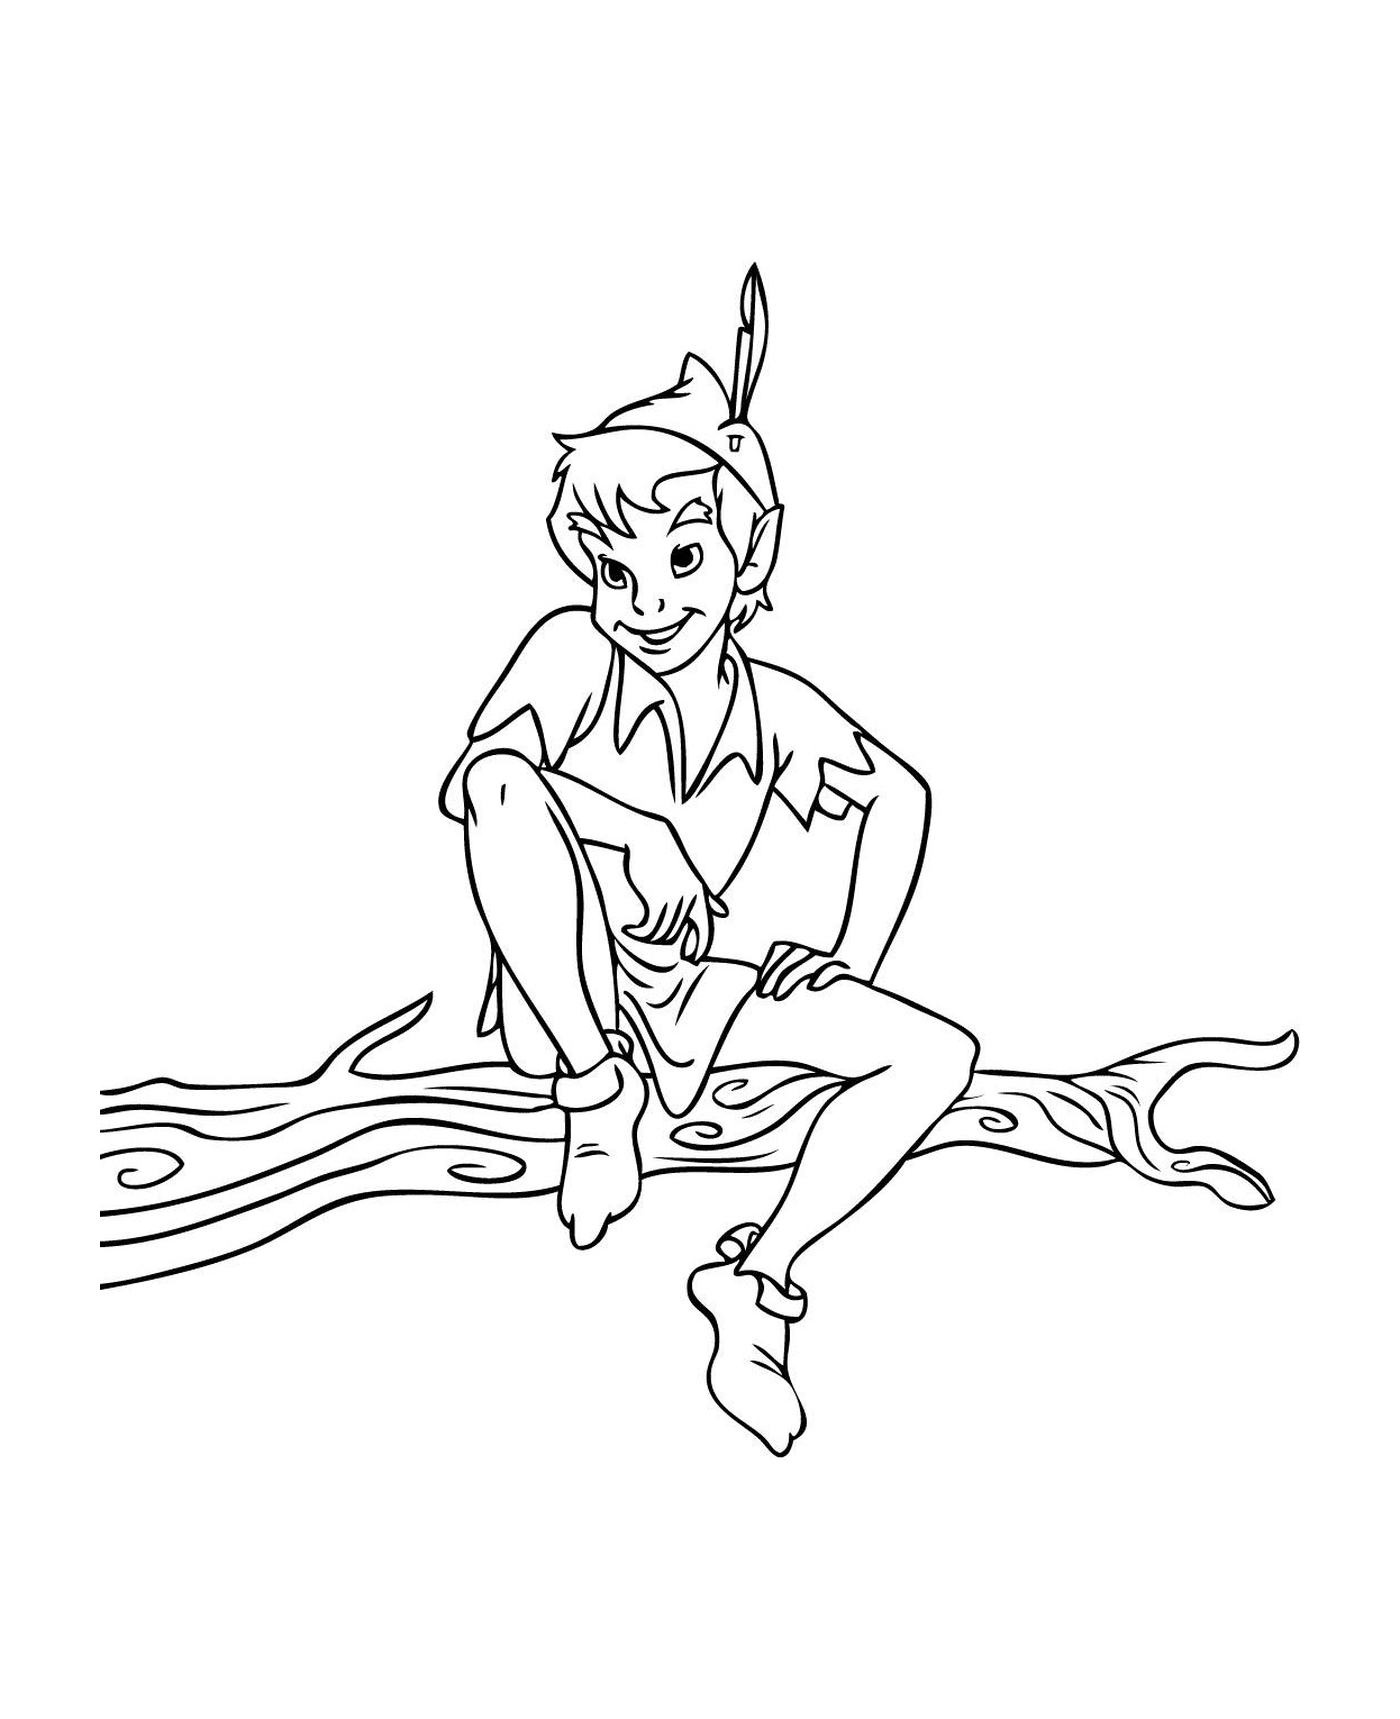  Peter Pan sentado en un árbol 